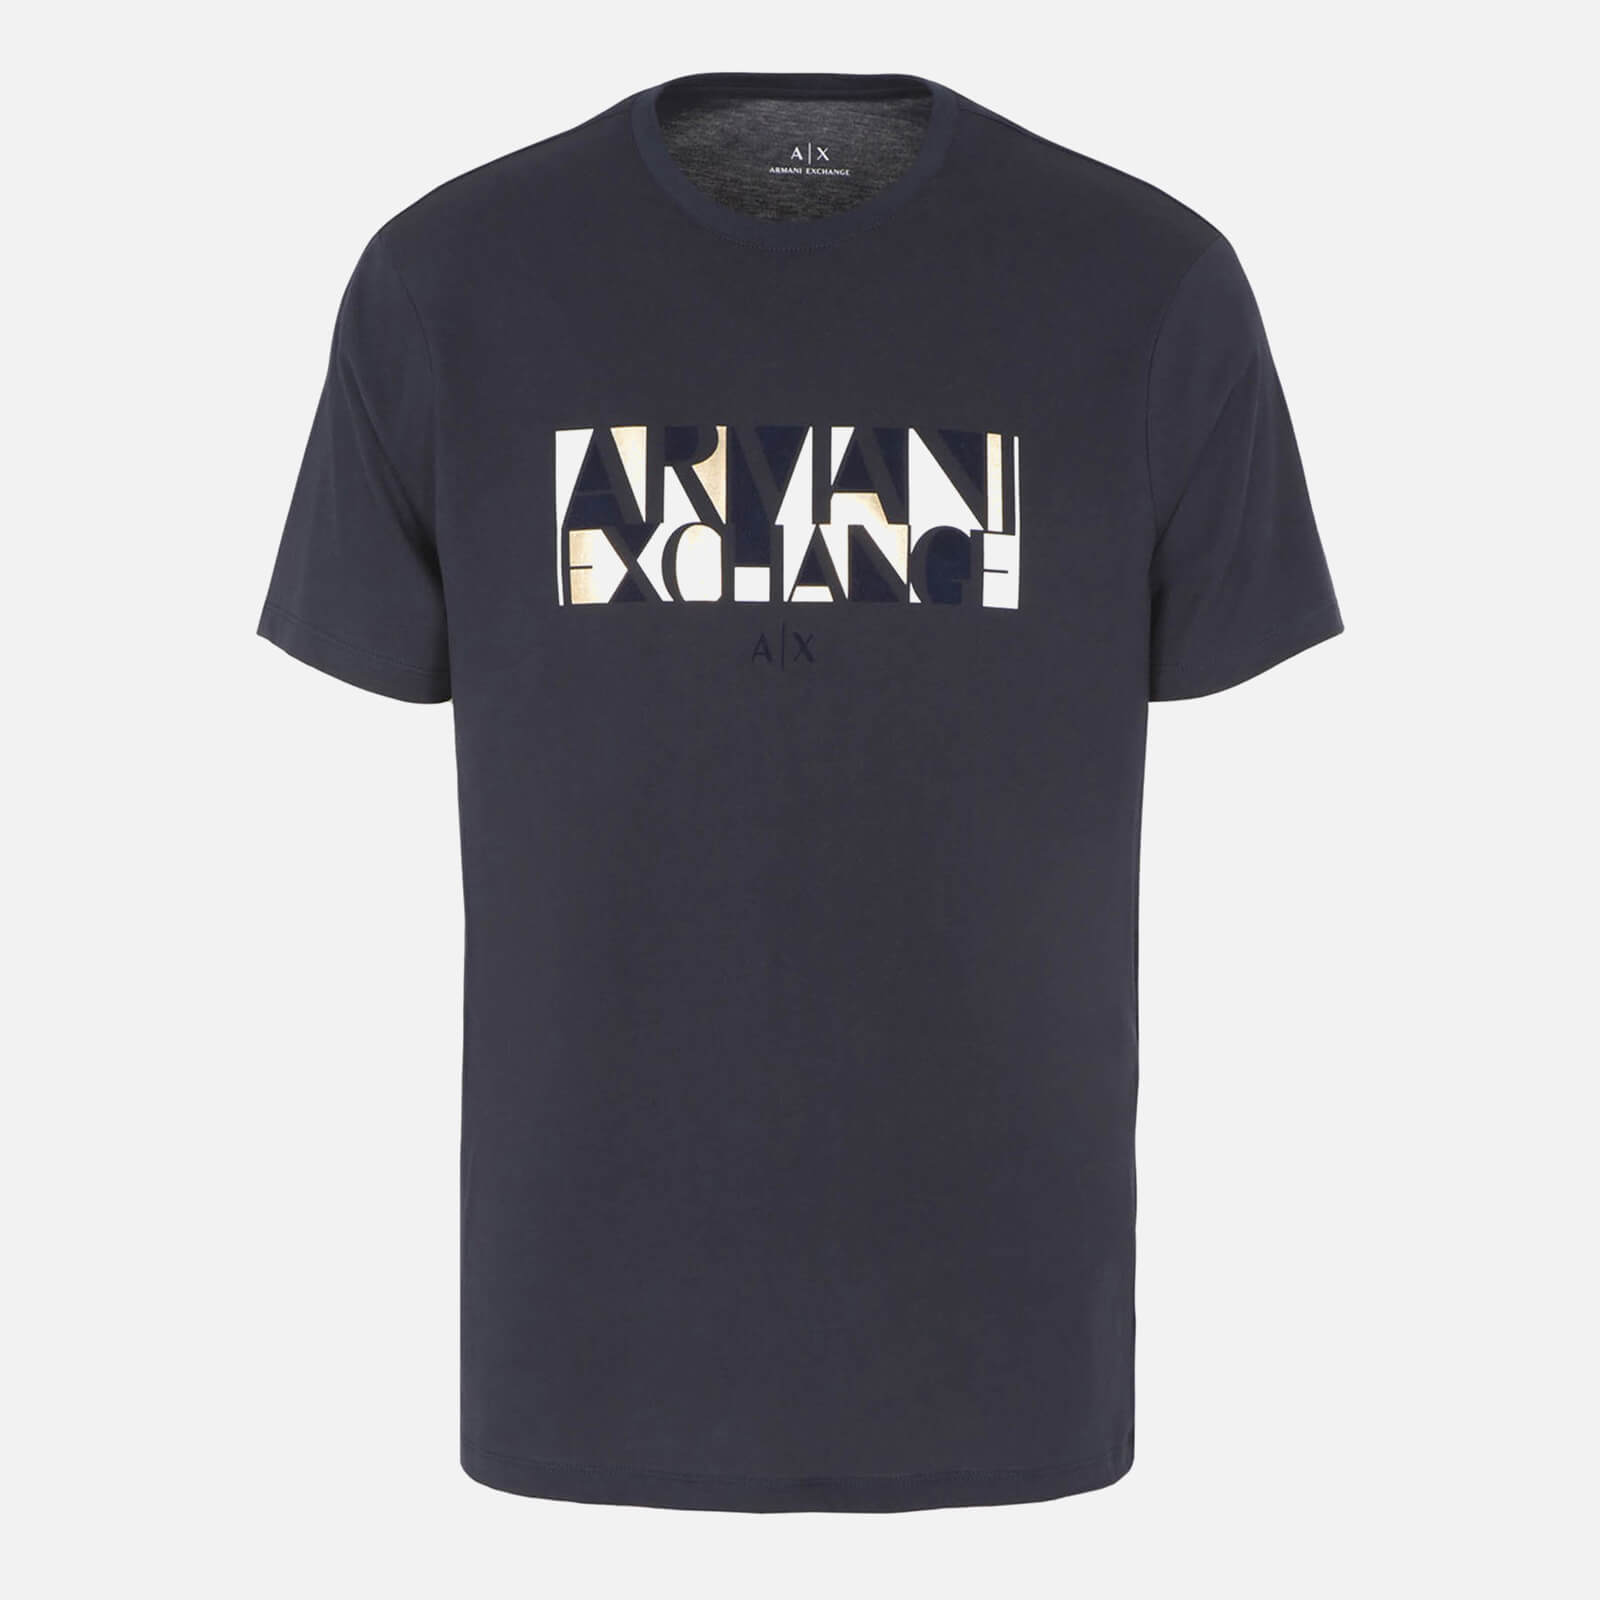 armani exchange men's abstract logo t-shirt - navy - s